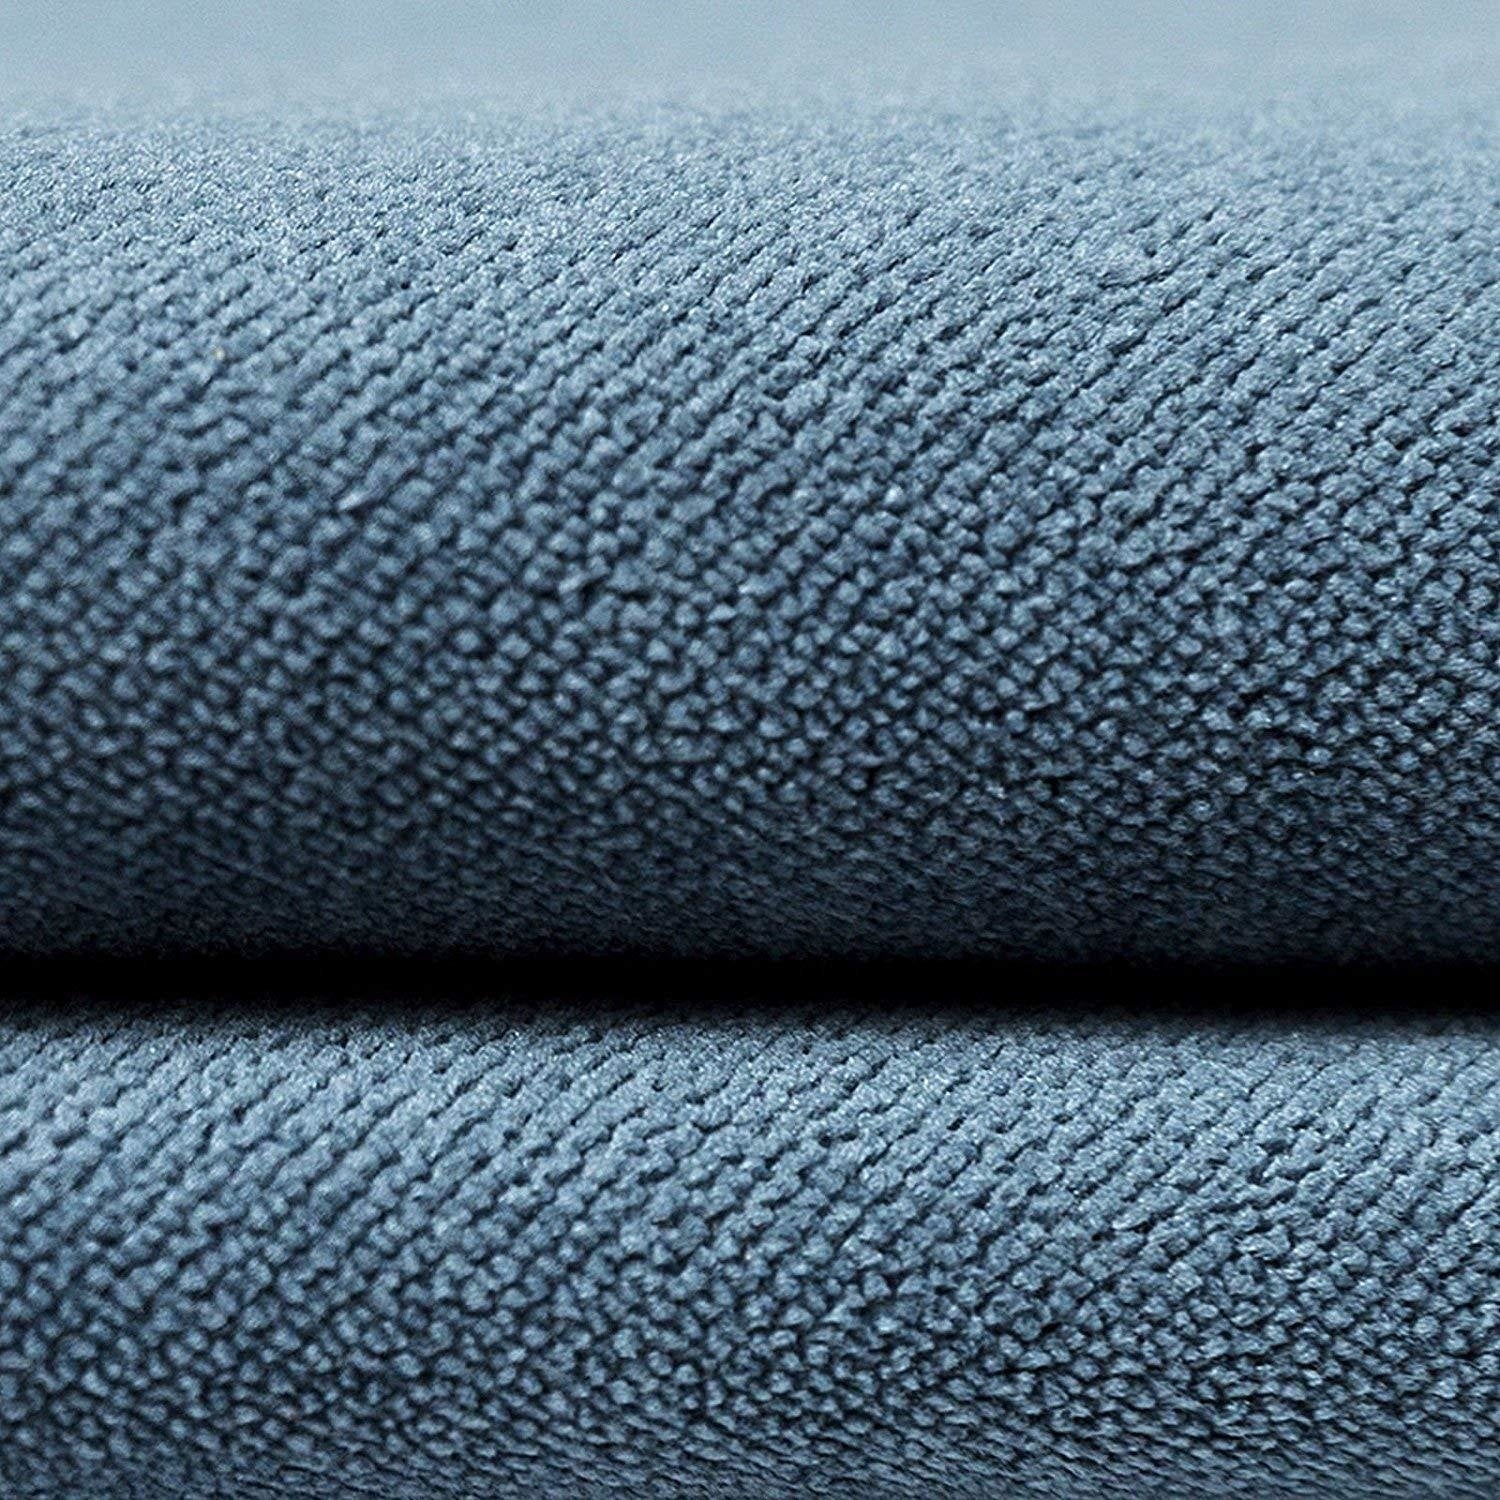 McAlister Textiles Deluxe Large Velvet Petrol Blue Box Cushion 50cm x 50cm x 5cm Box Cushions 